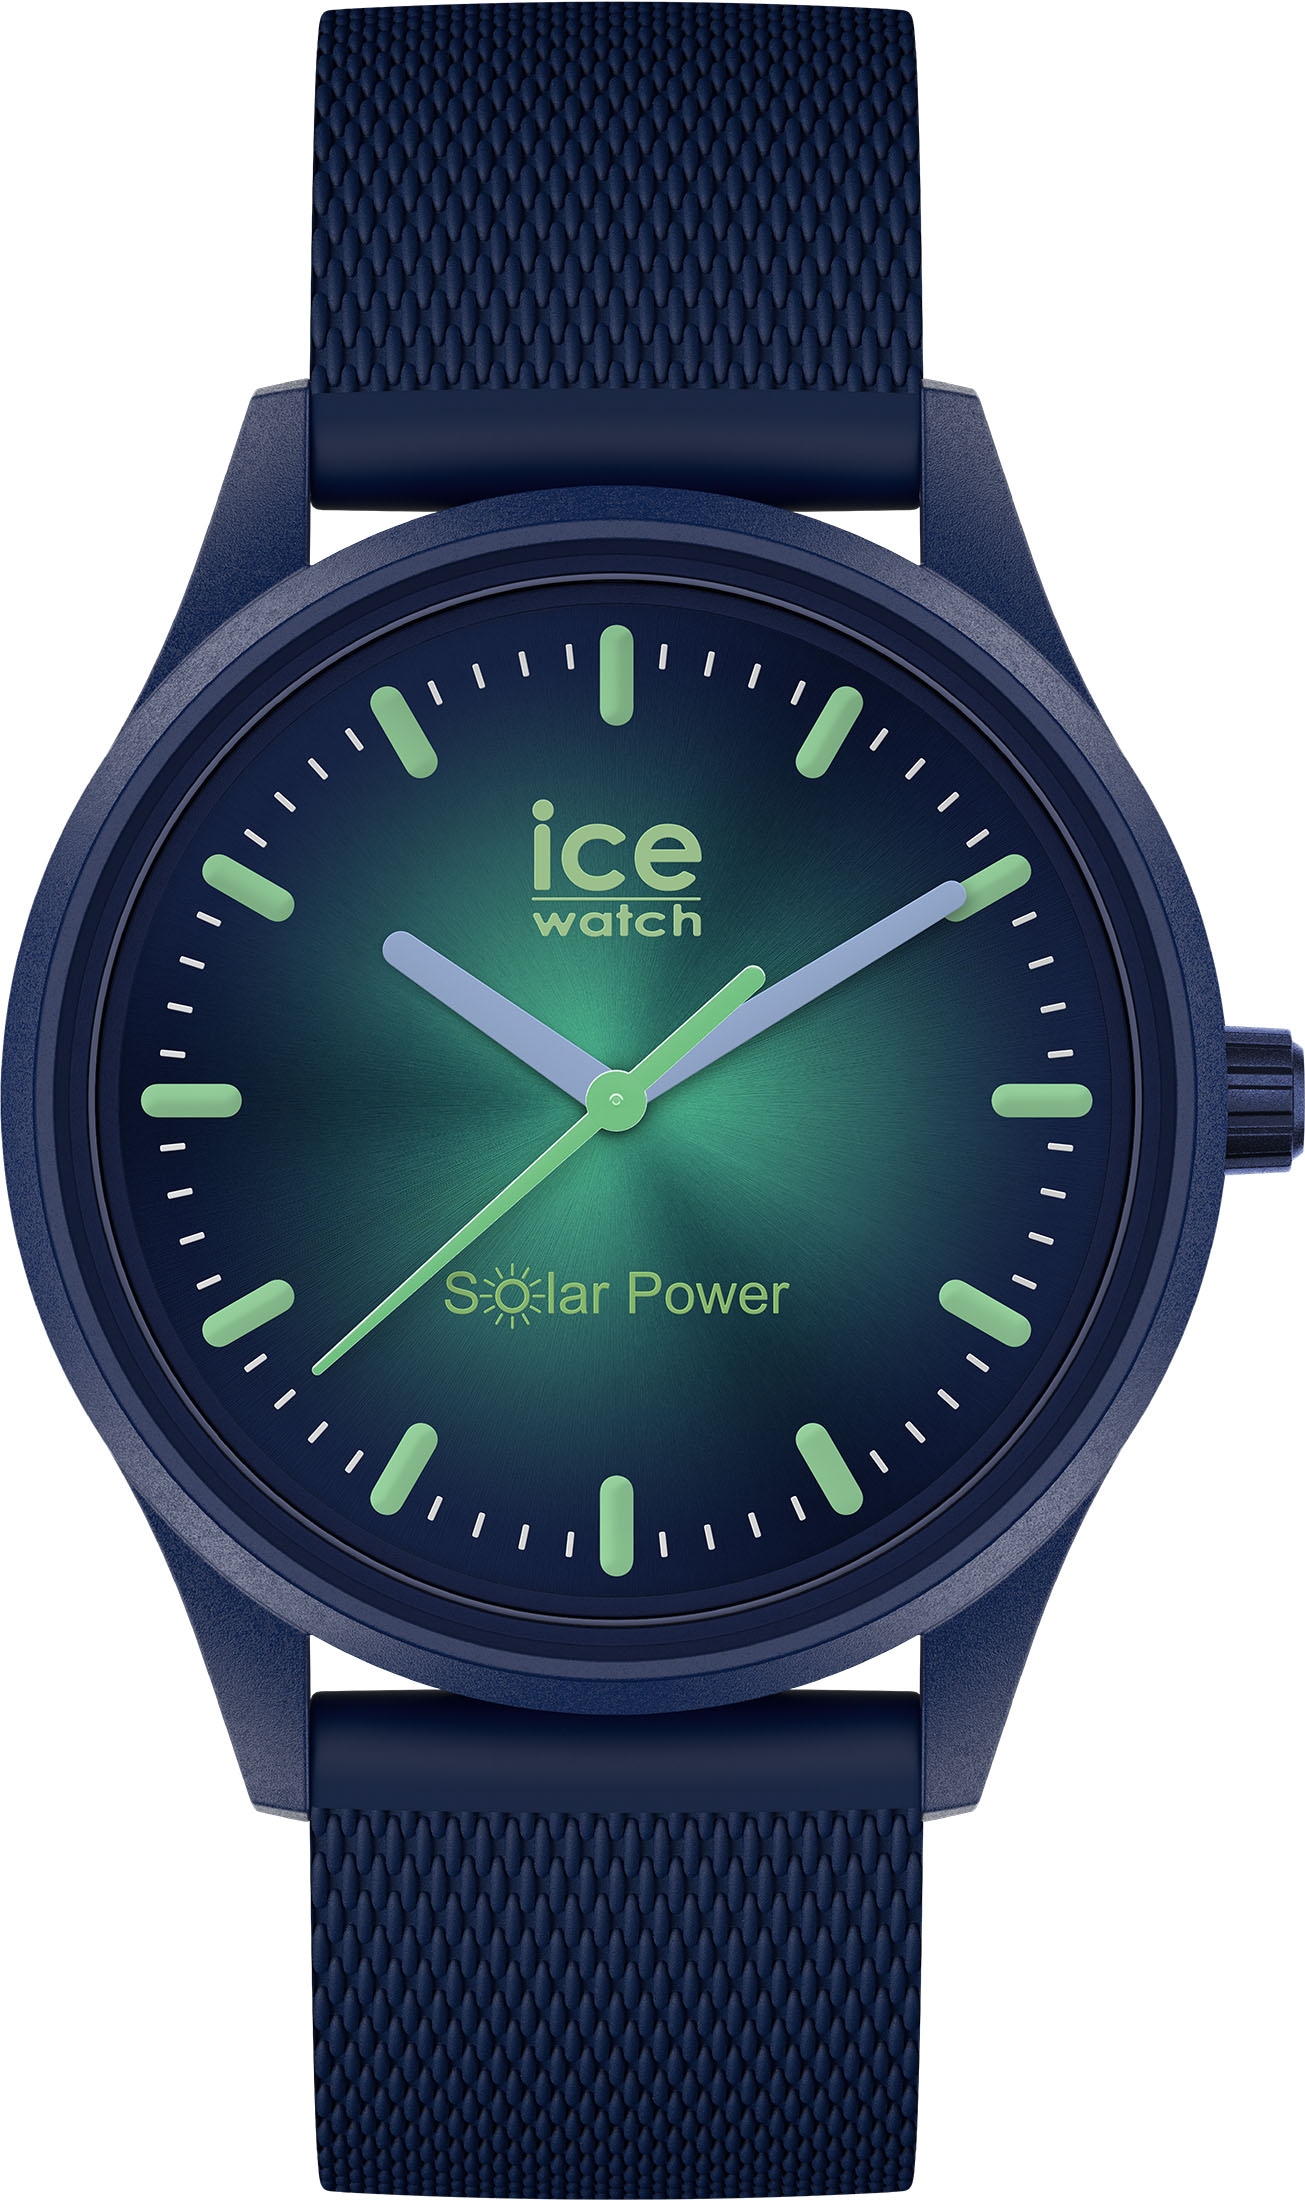 solar - online ice-watch bei »ICE kaufen 019032« Borealis, OTTO Solaruhr power